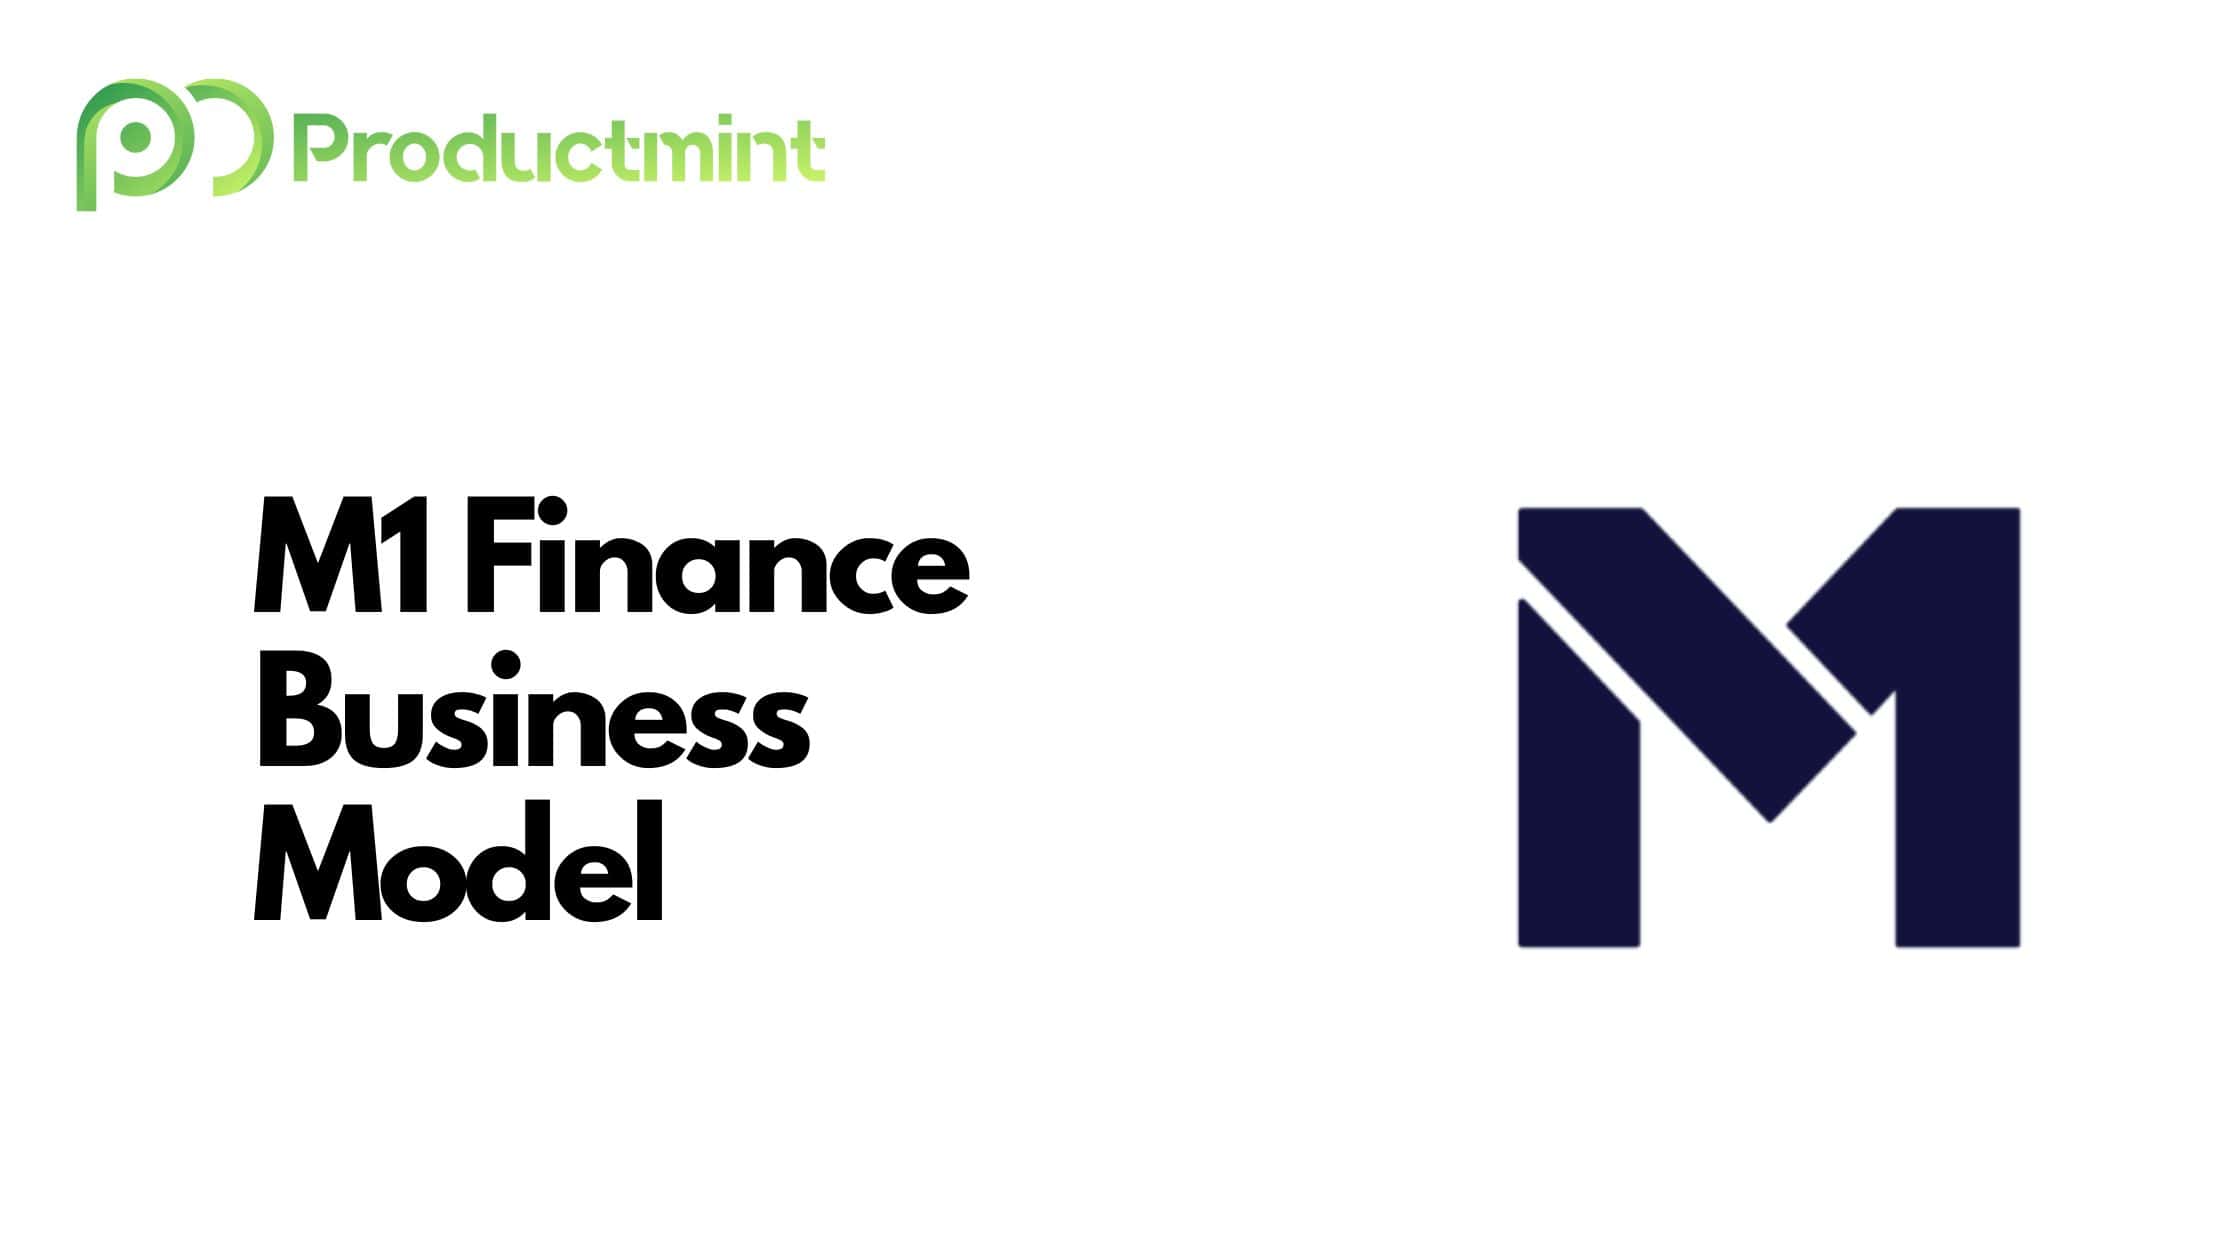 M1 Finance Business Model